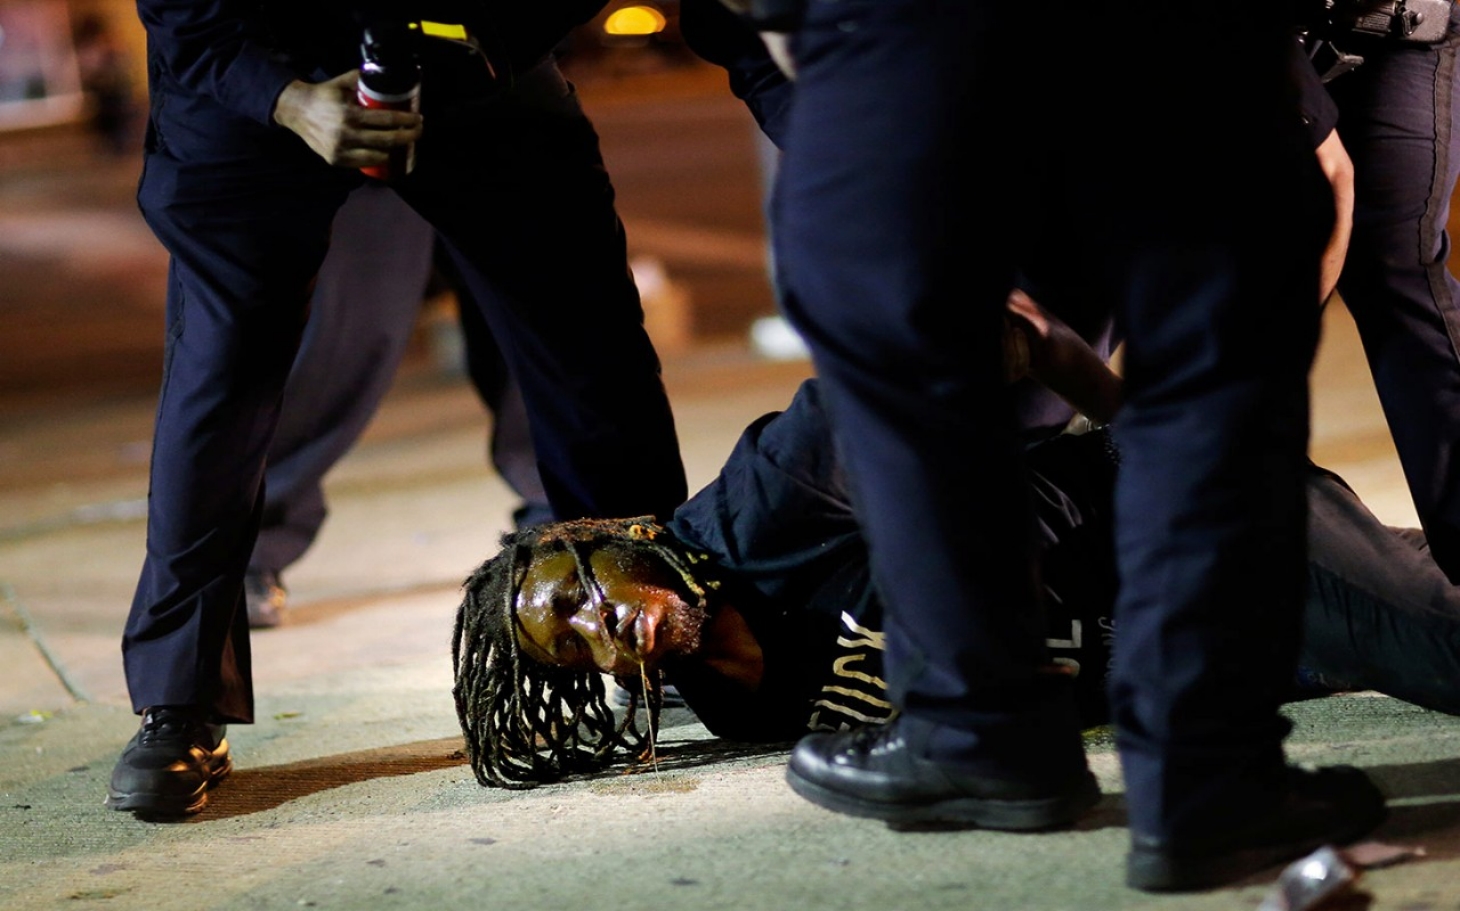 police brutality against blacks